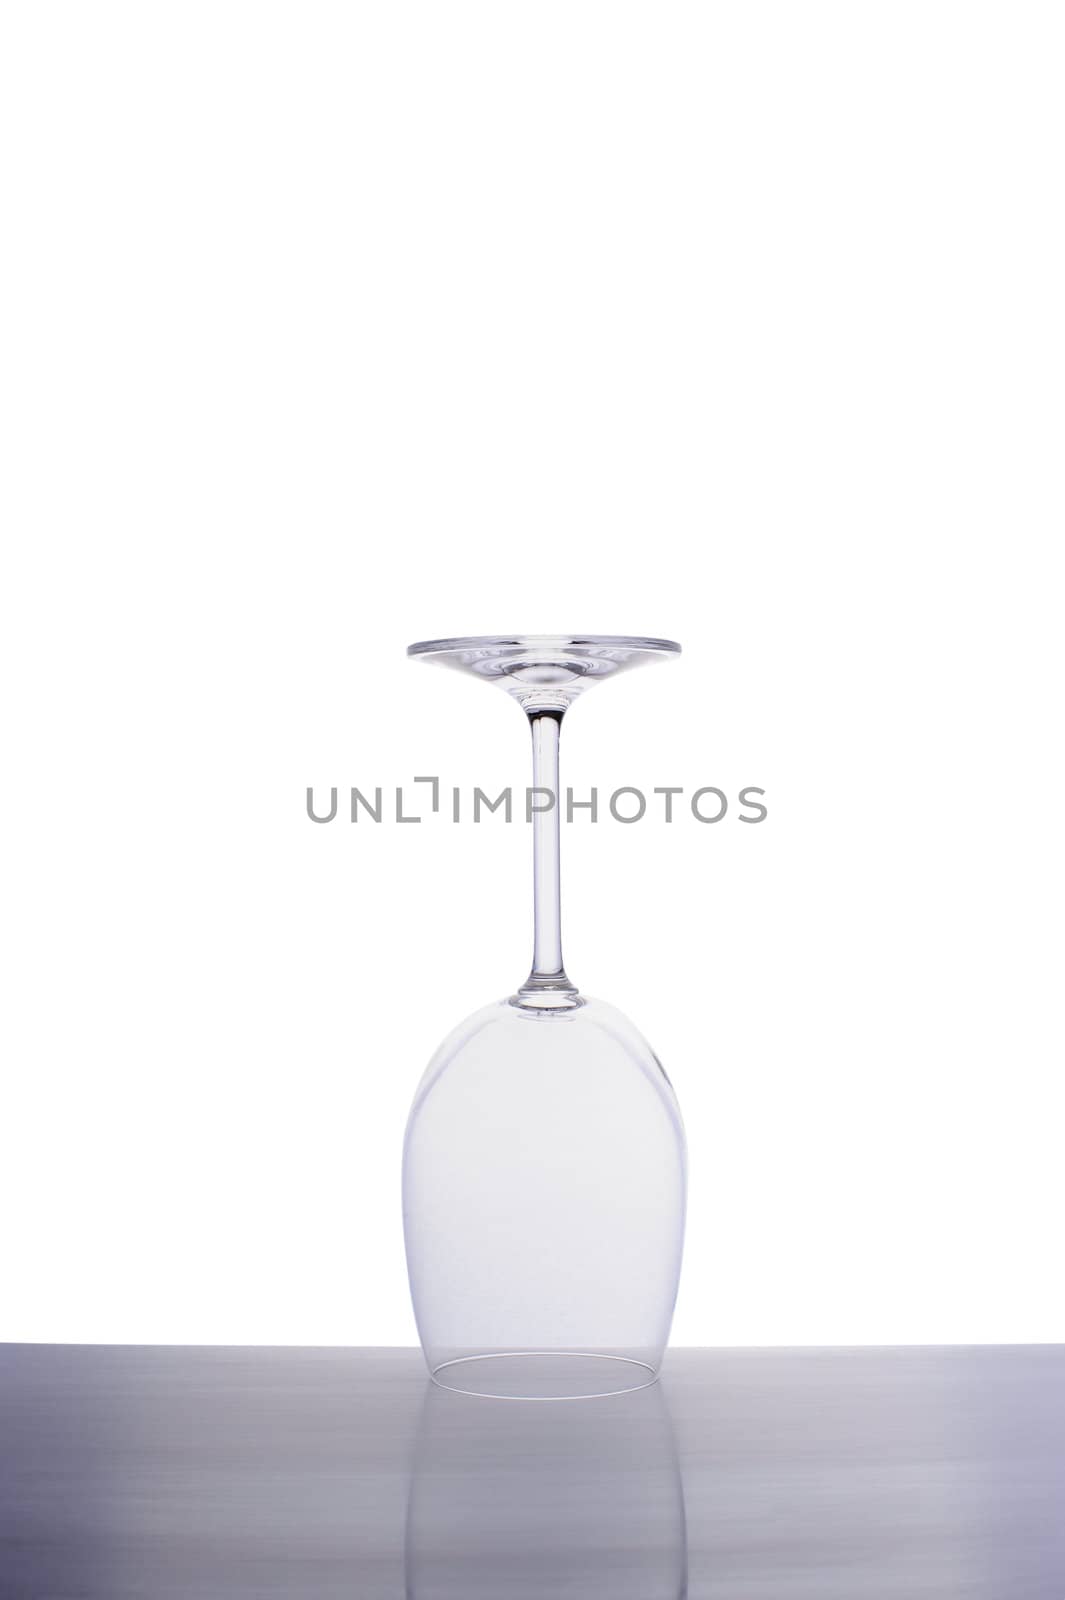 Inverted empty wine glass by nvelichko